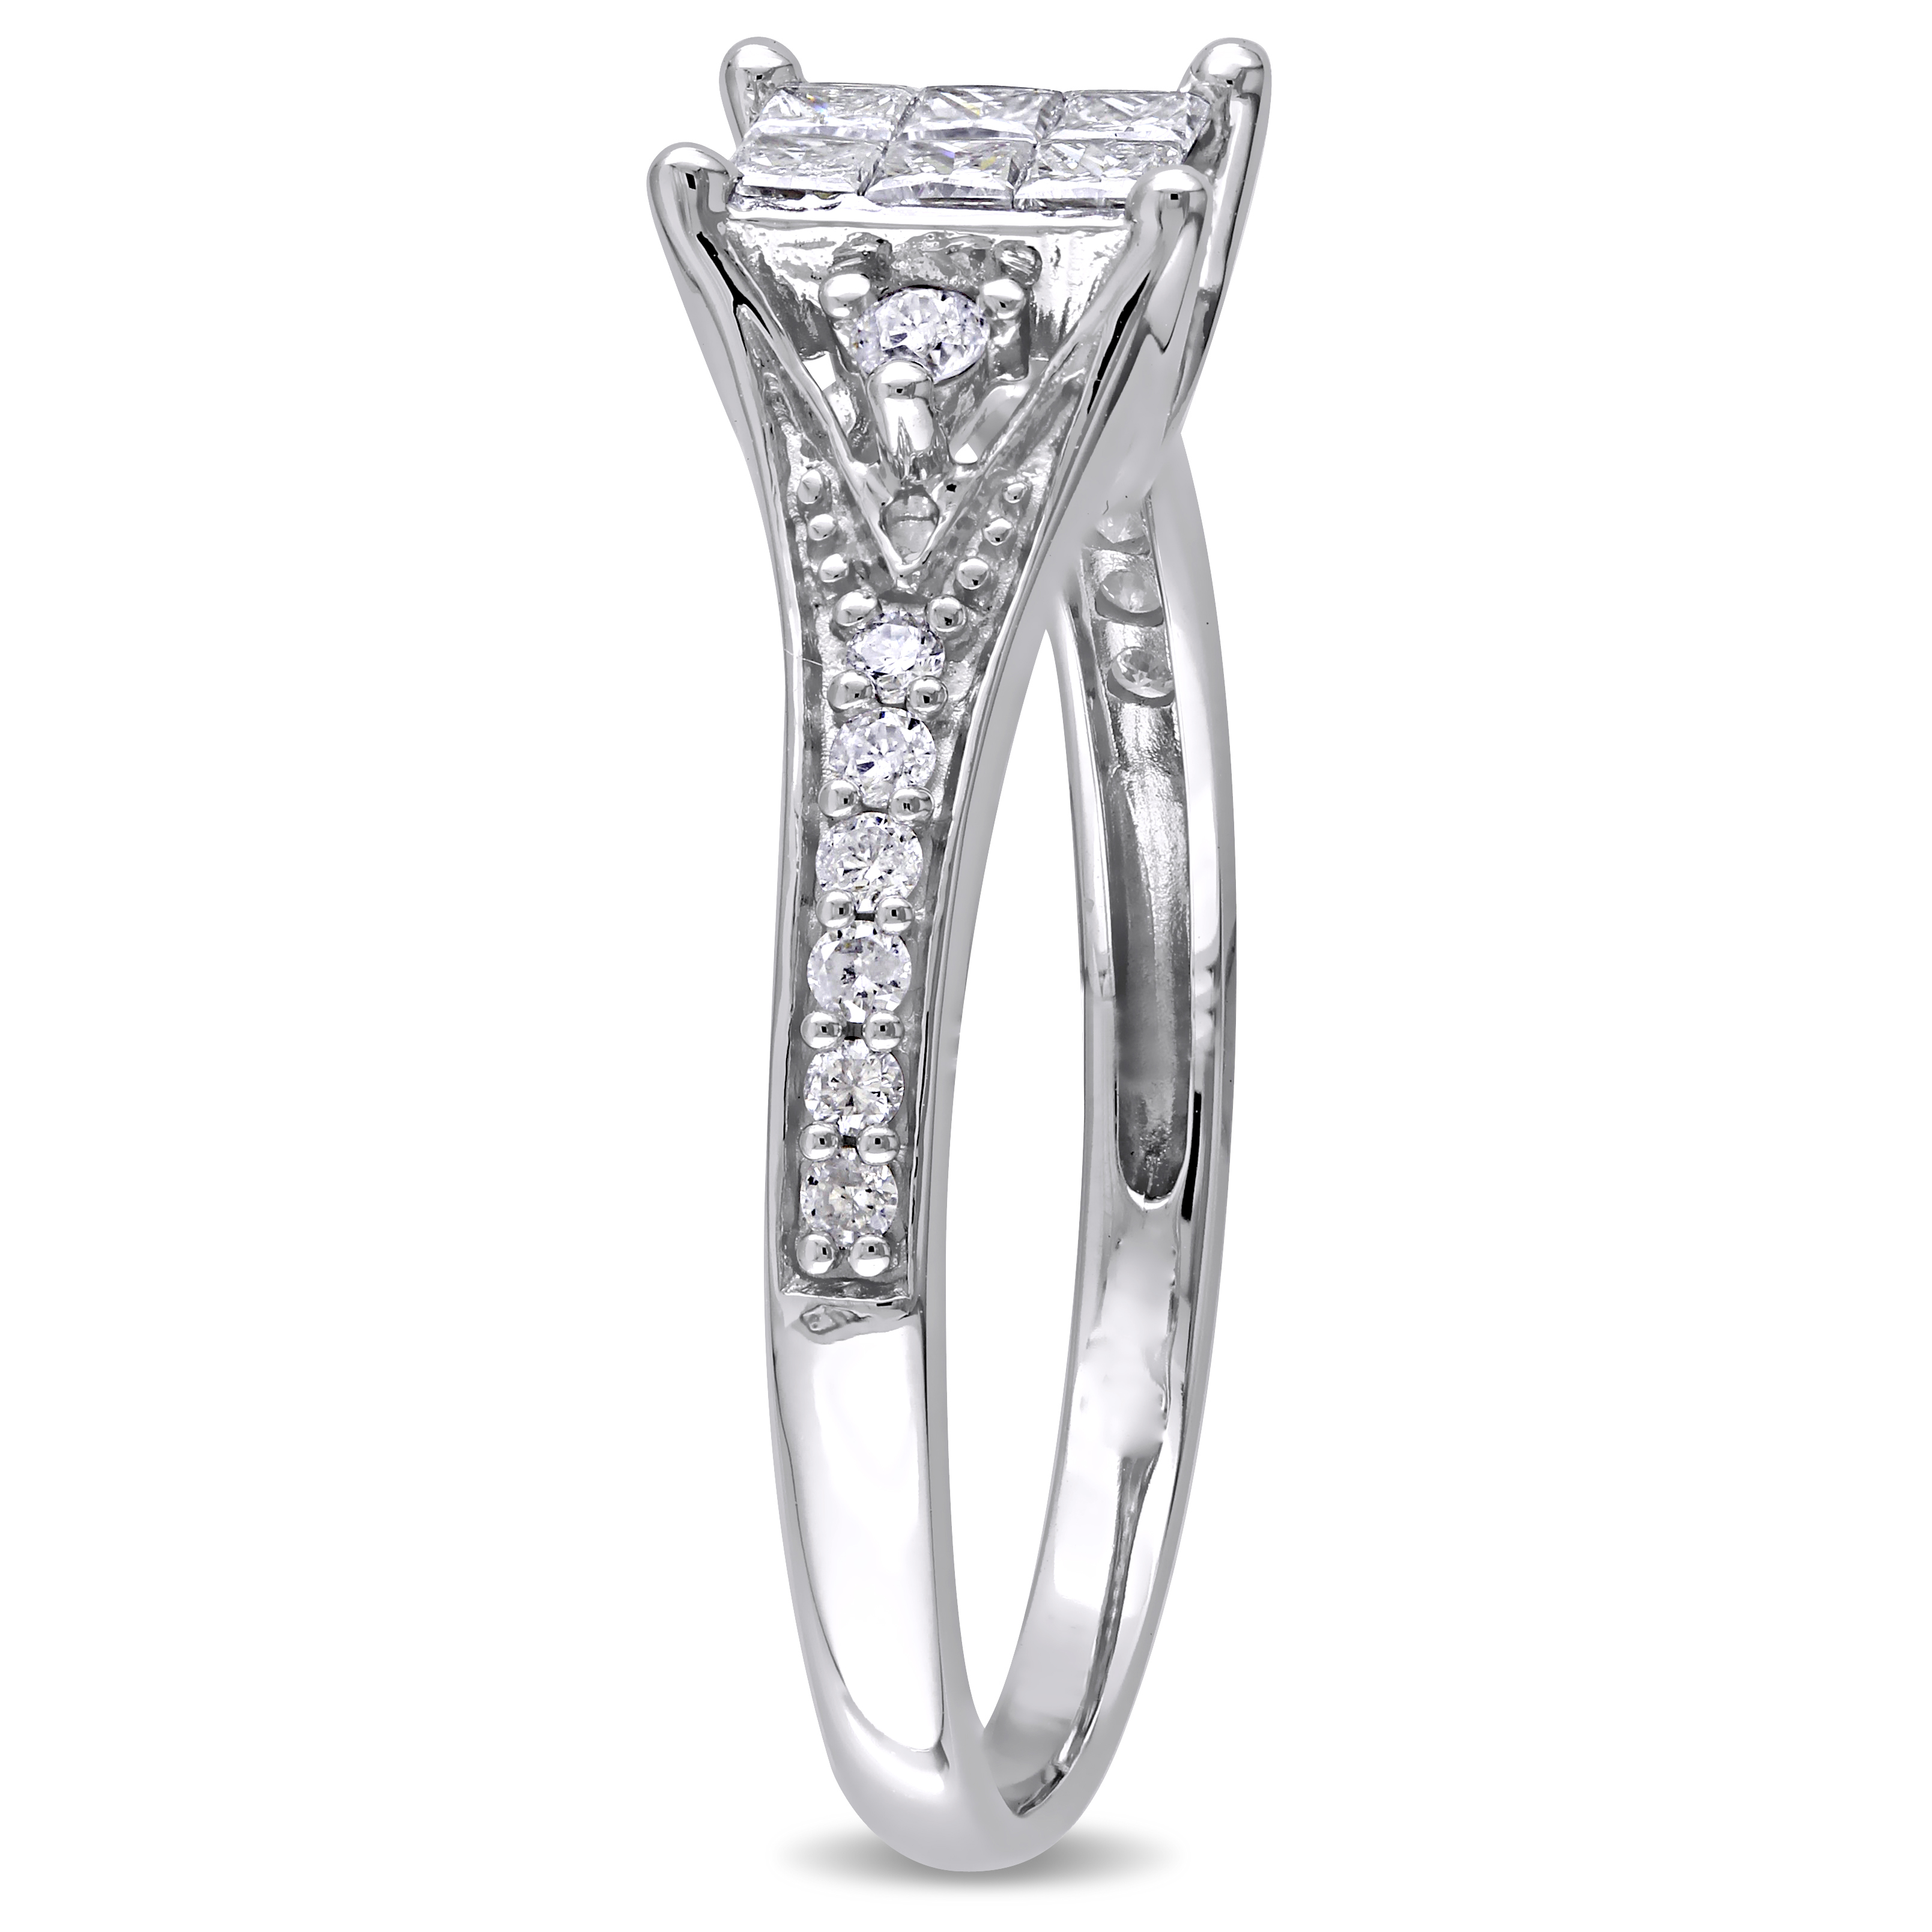 1/2 CT TW Princess Cut Diamond Engagement Ring in 10k White Gold